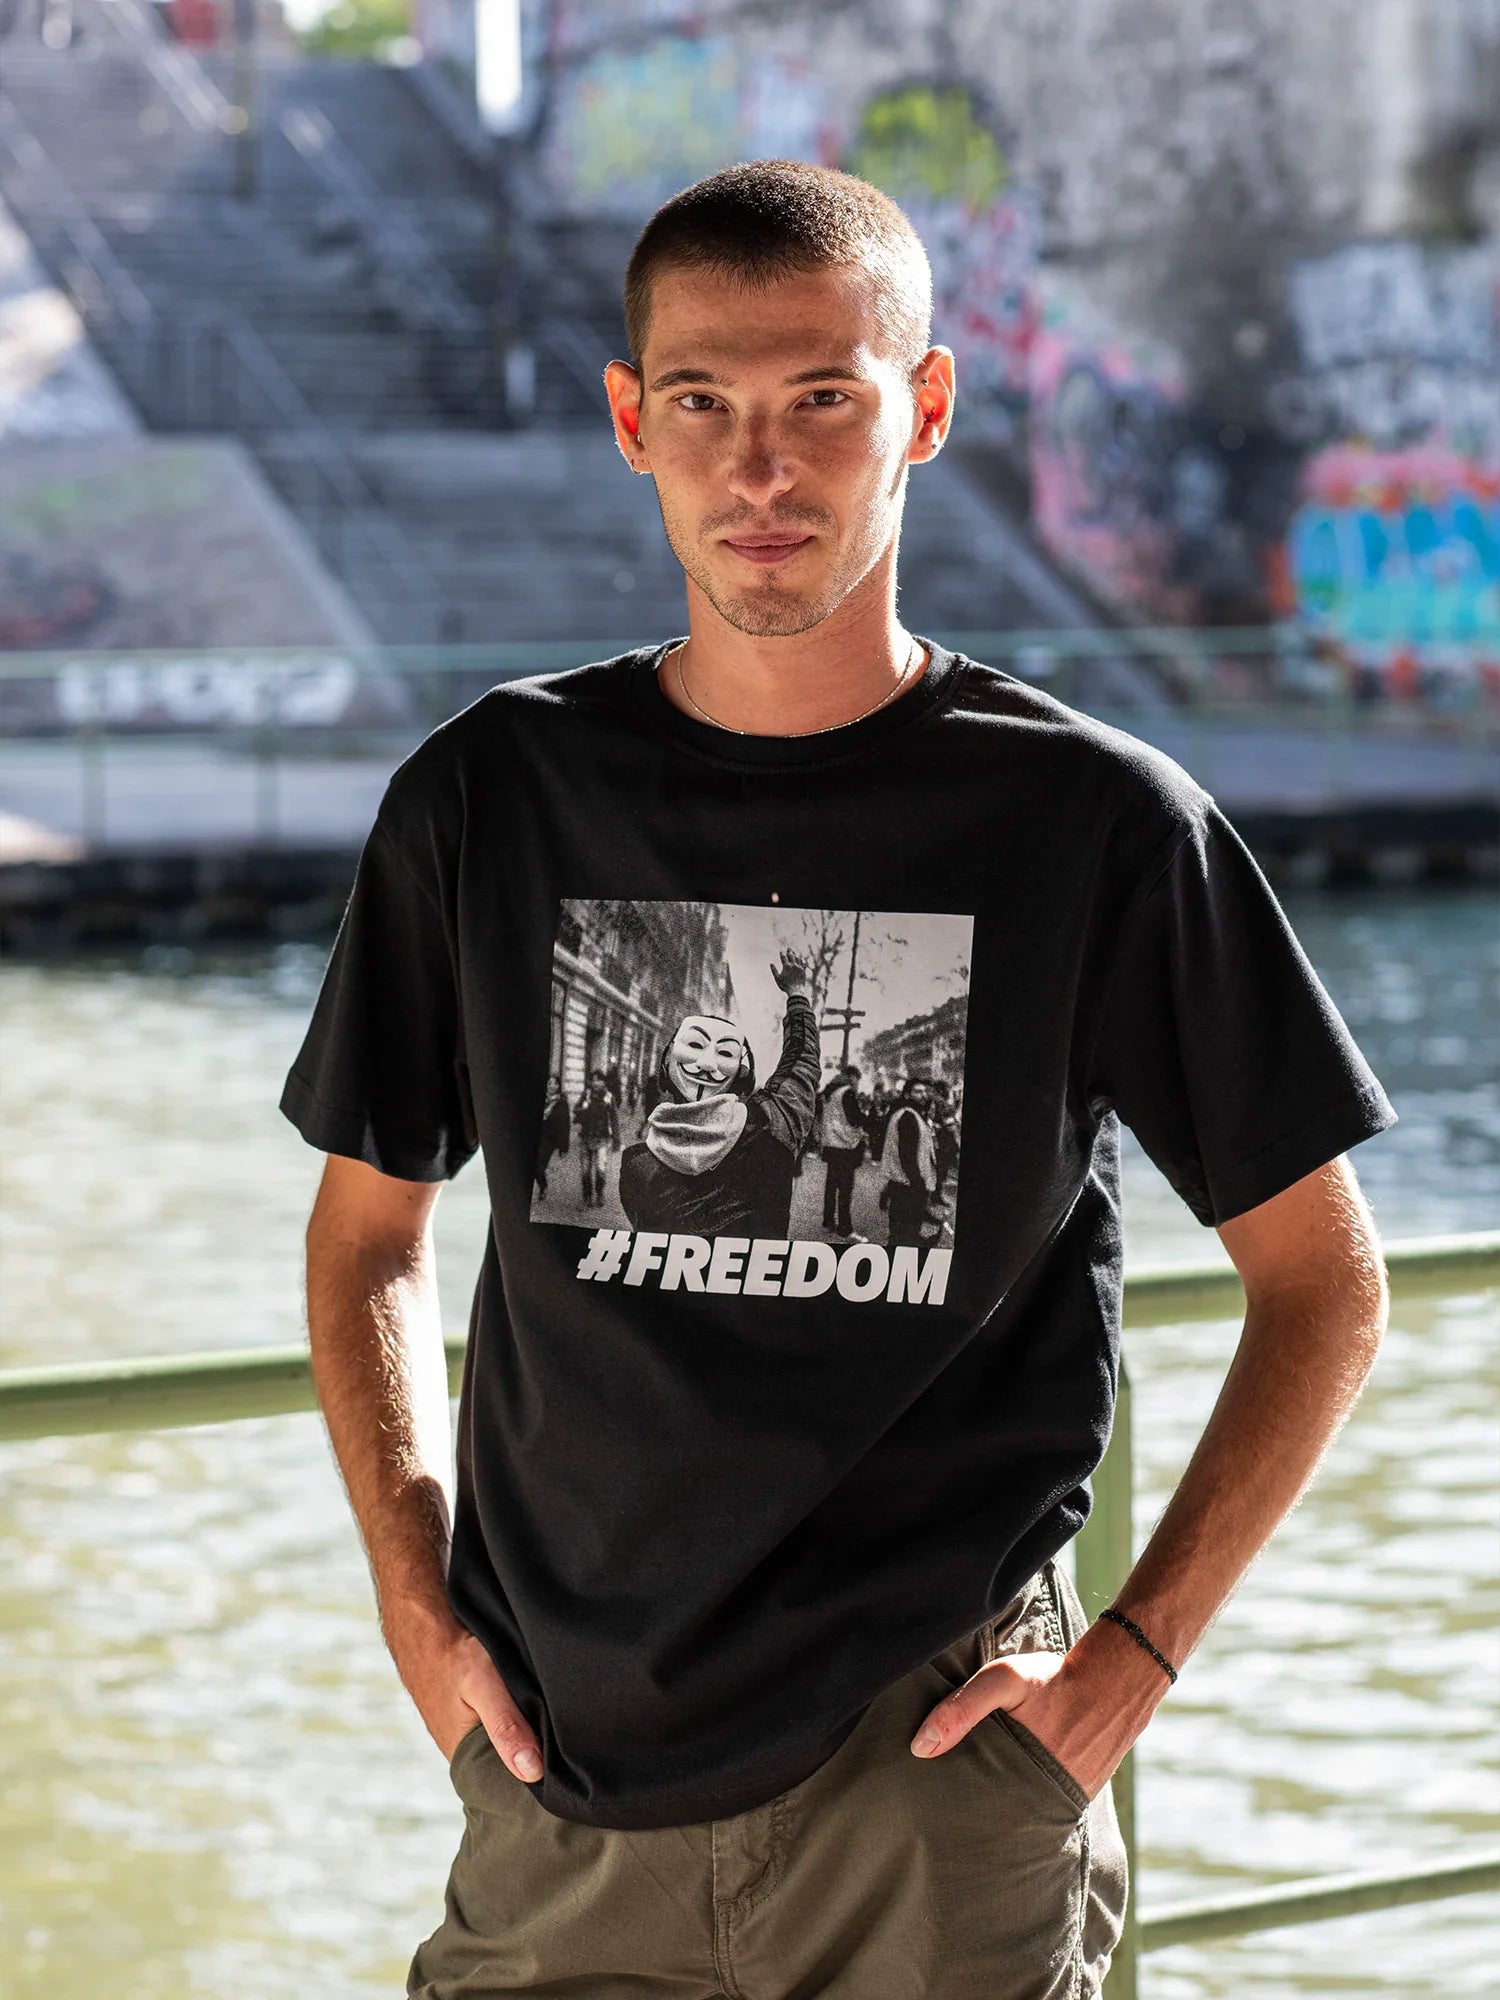 T-shirt Freedom - Blanc -h